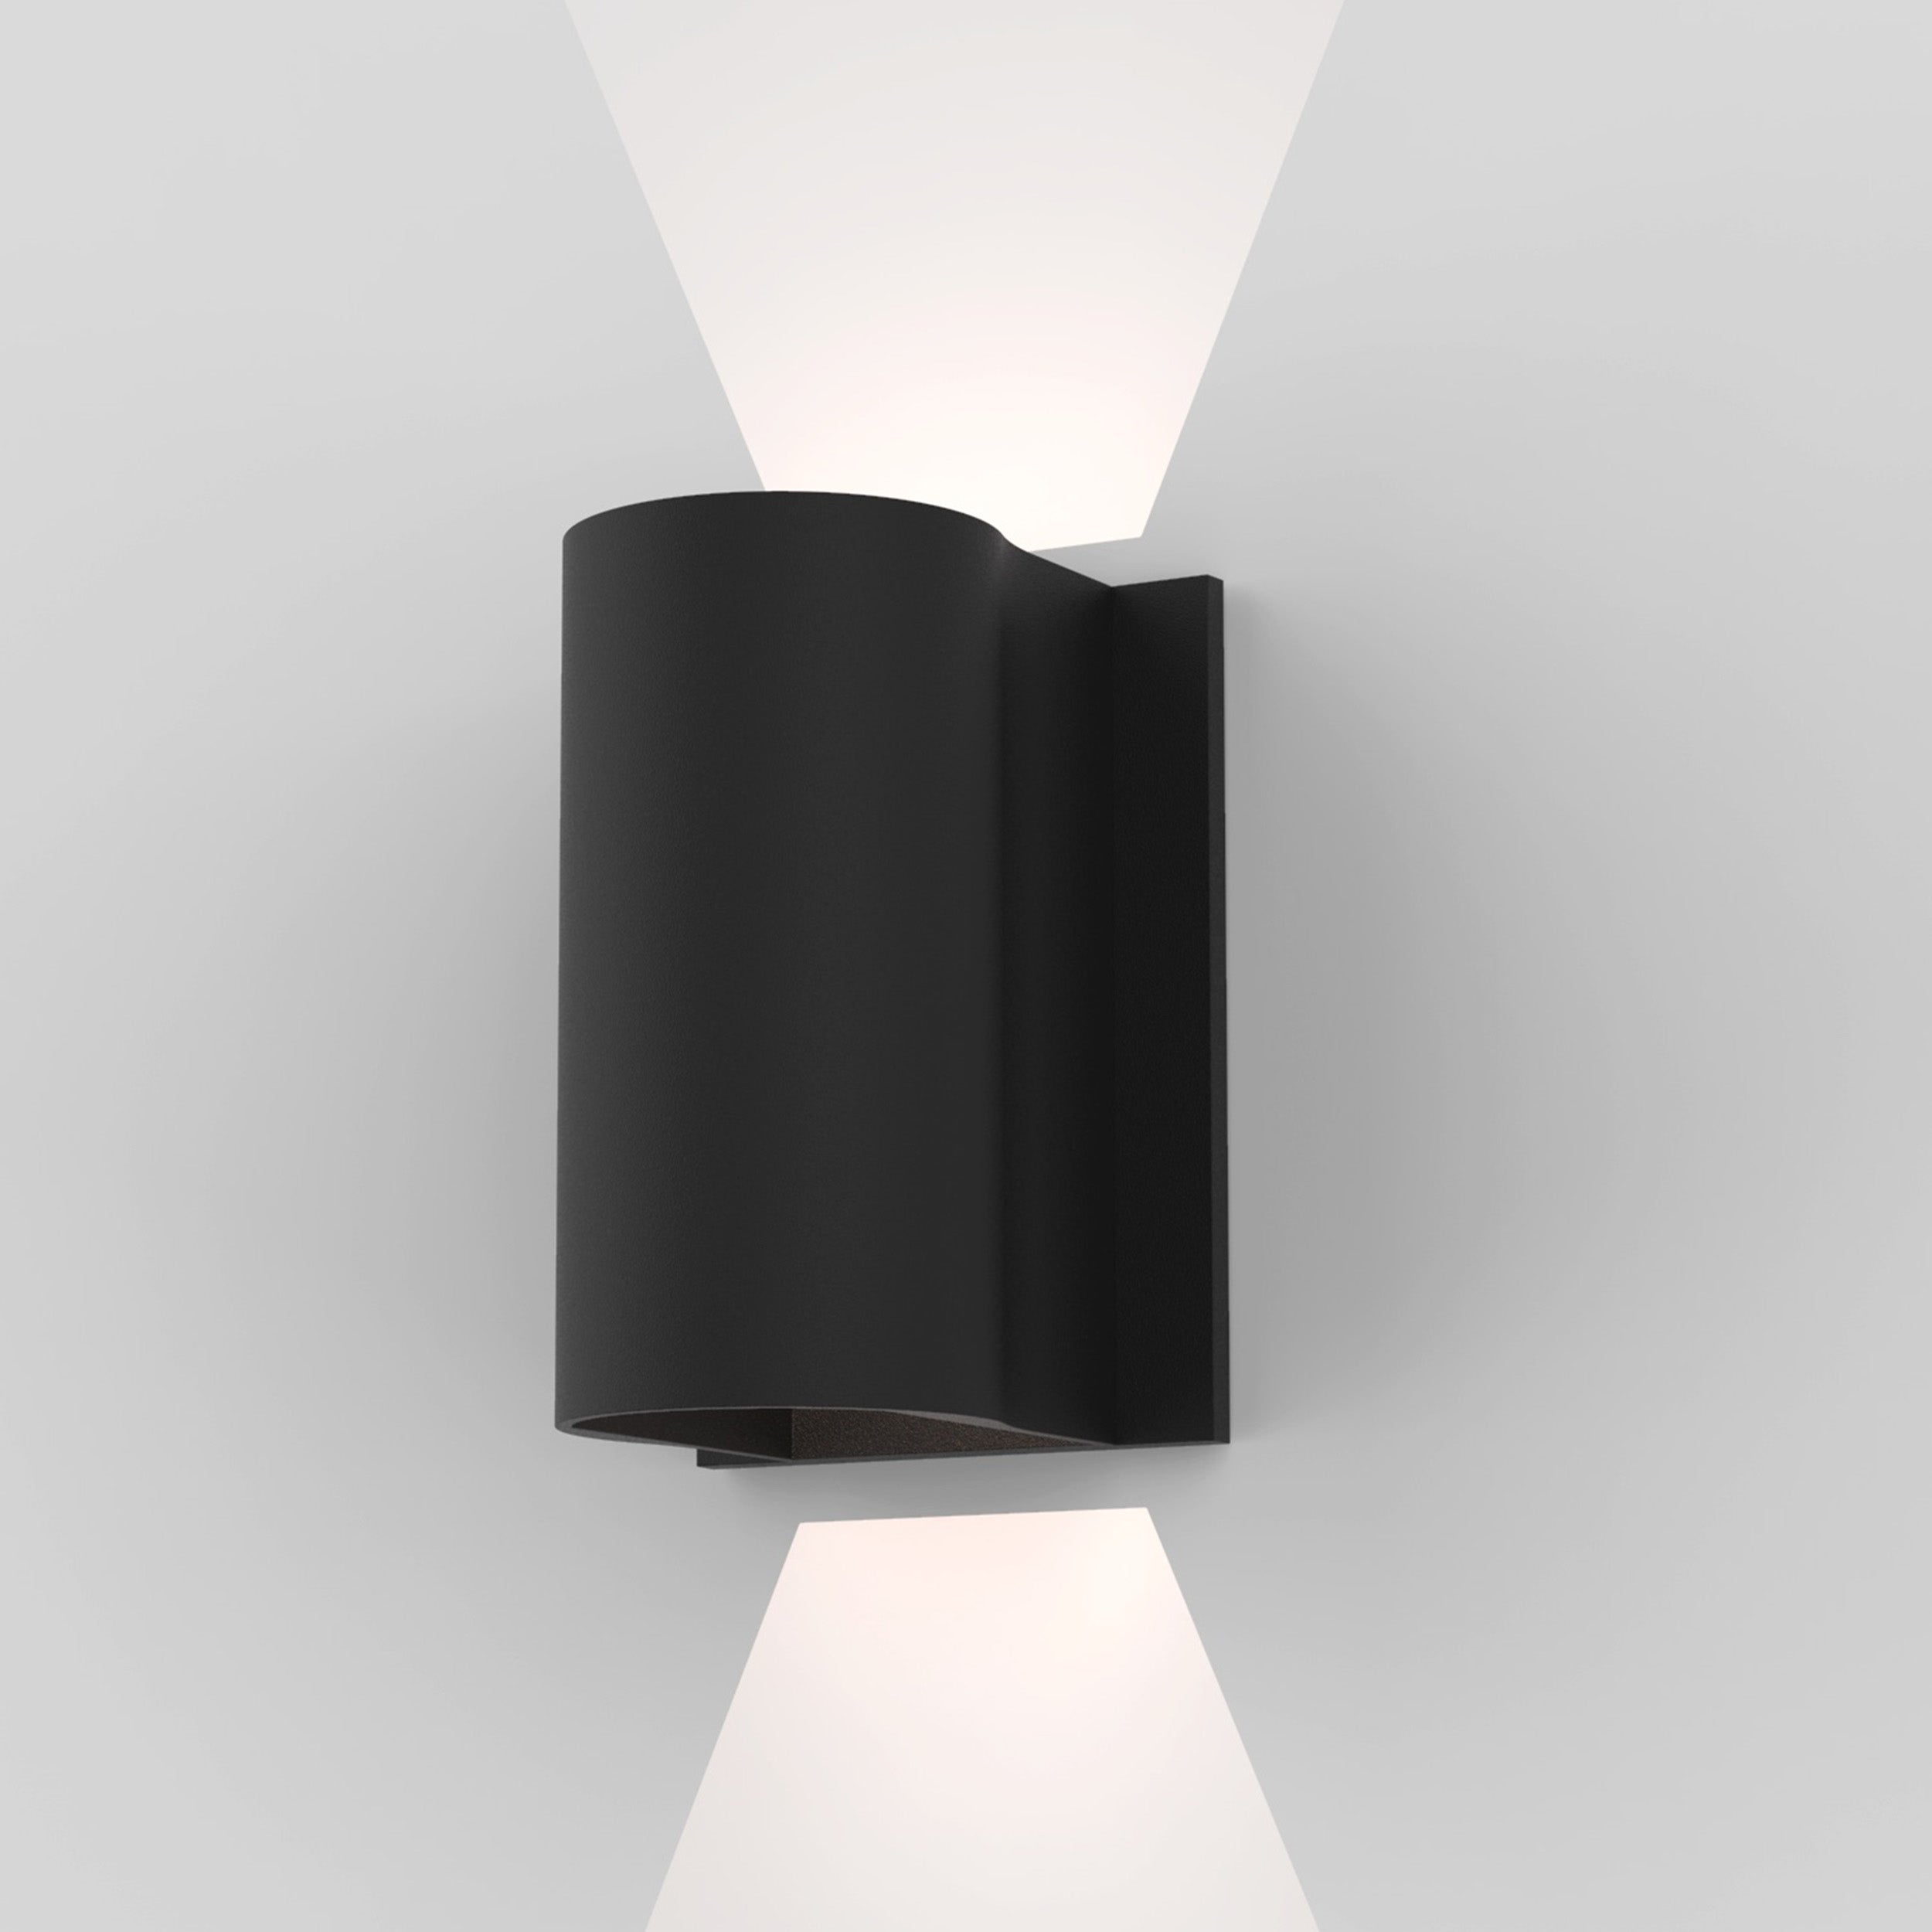 Astro Lighting Dunbar Wall Light Fixtures Astro Lighting 4.17x4.33x6.3 Textured Black Yes (Integral), High Power LED